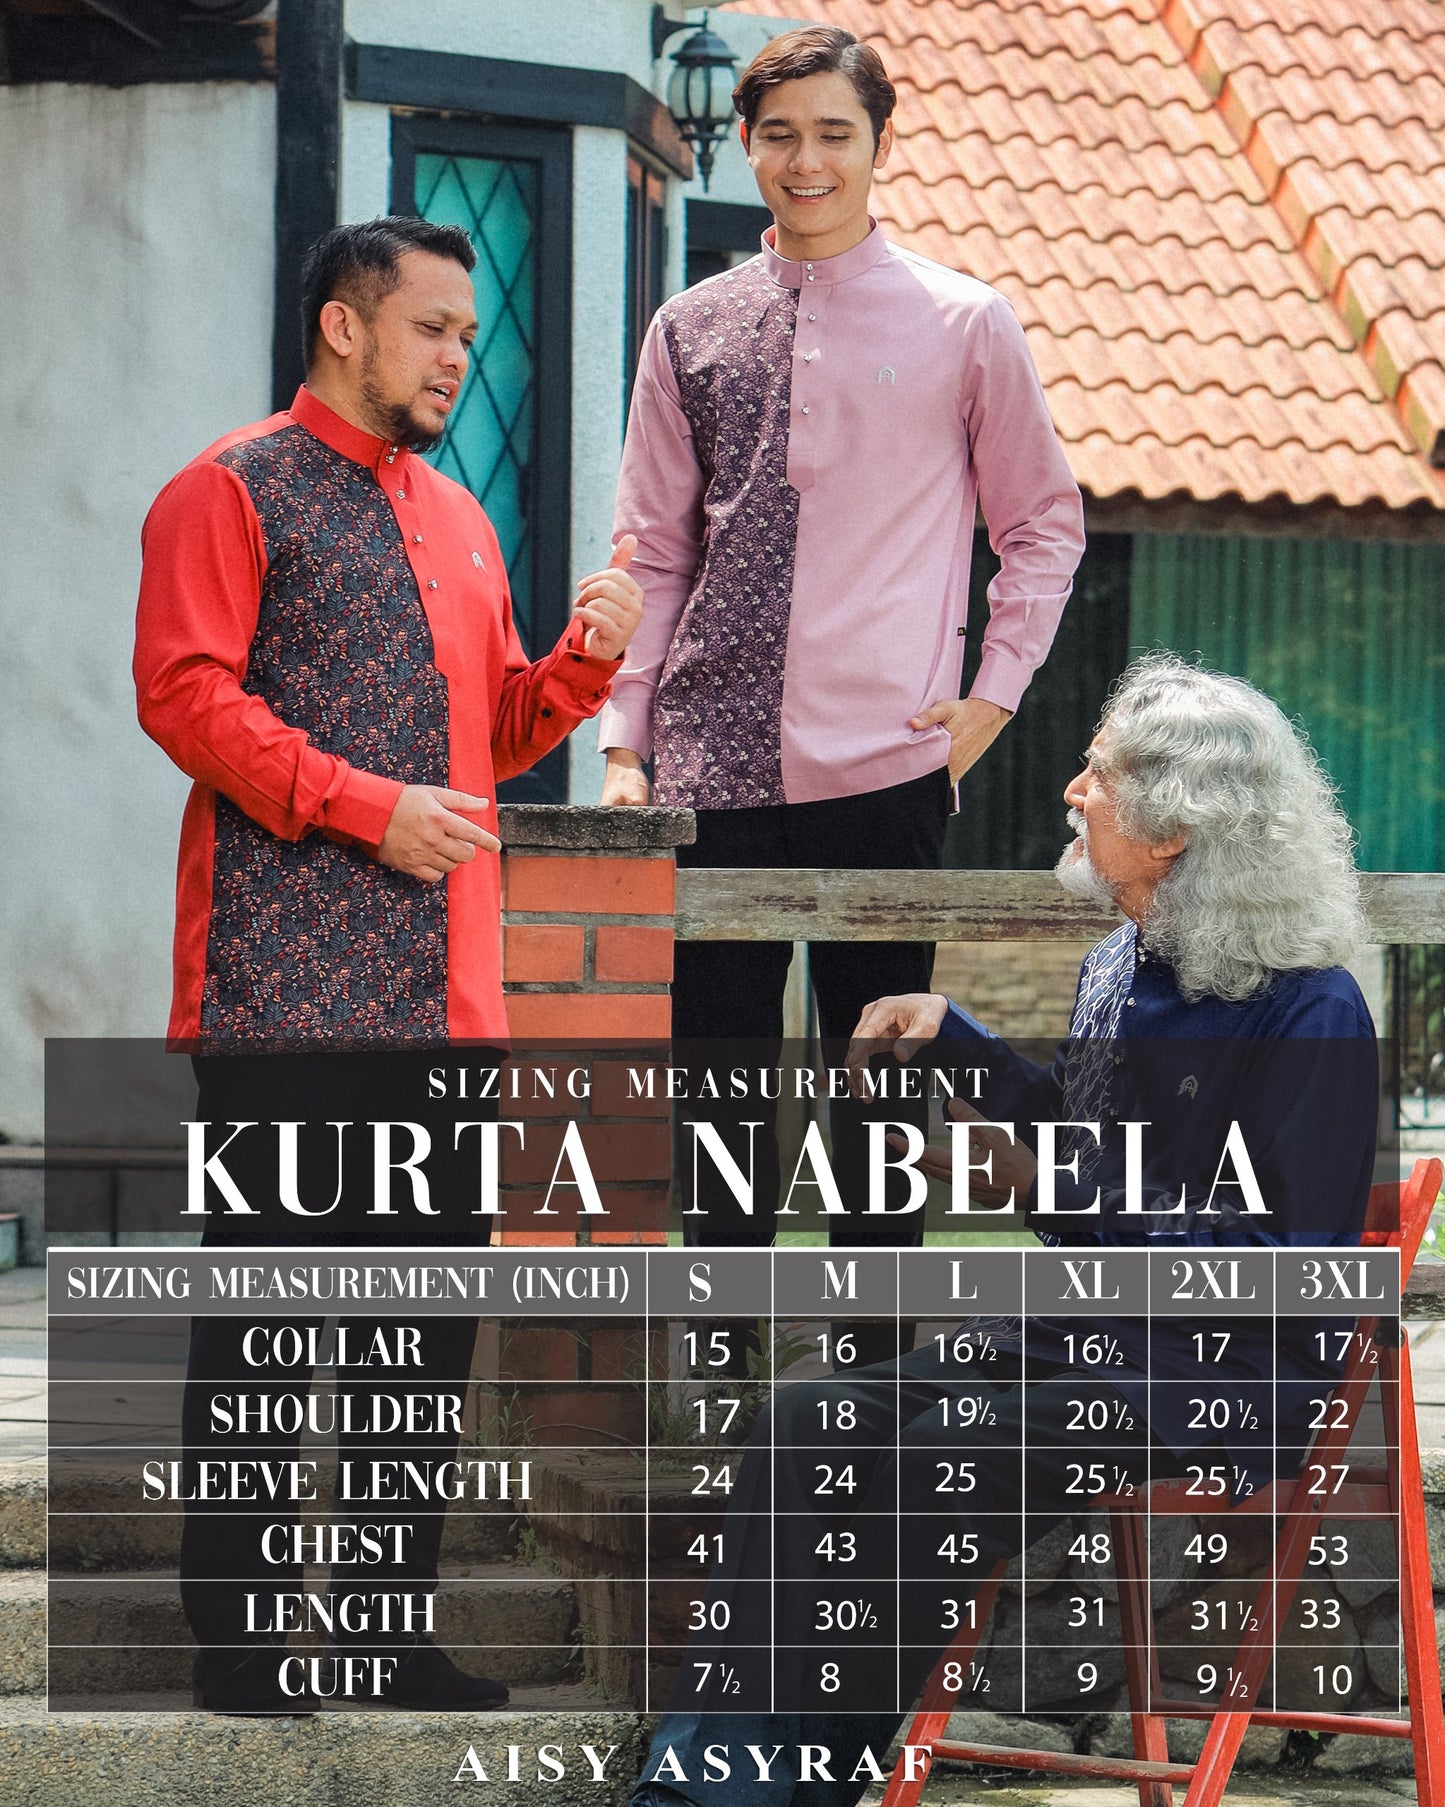 Kurta Nabeela Raya - Kod 44 (Brick Orange)  - NEW RELEASE